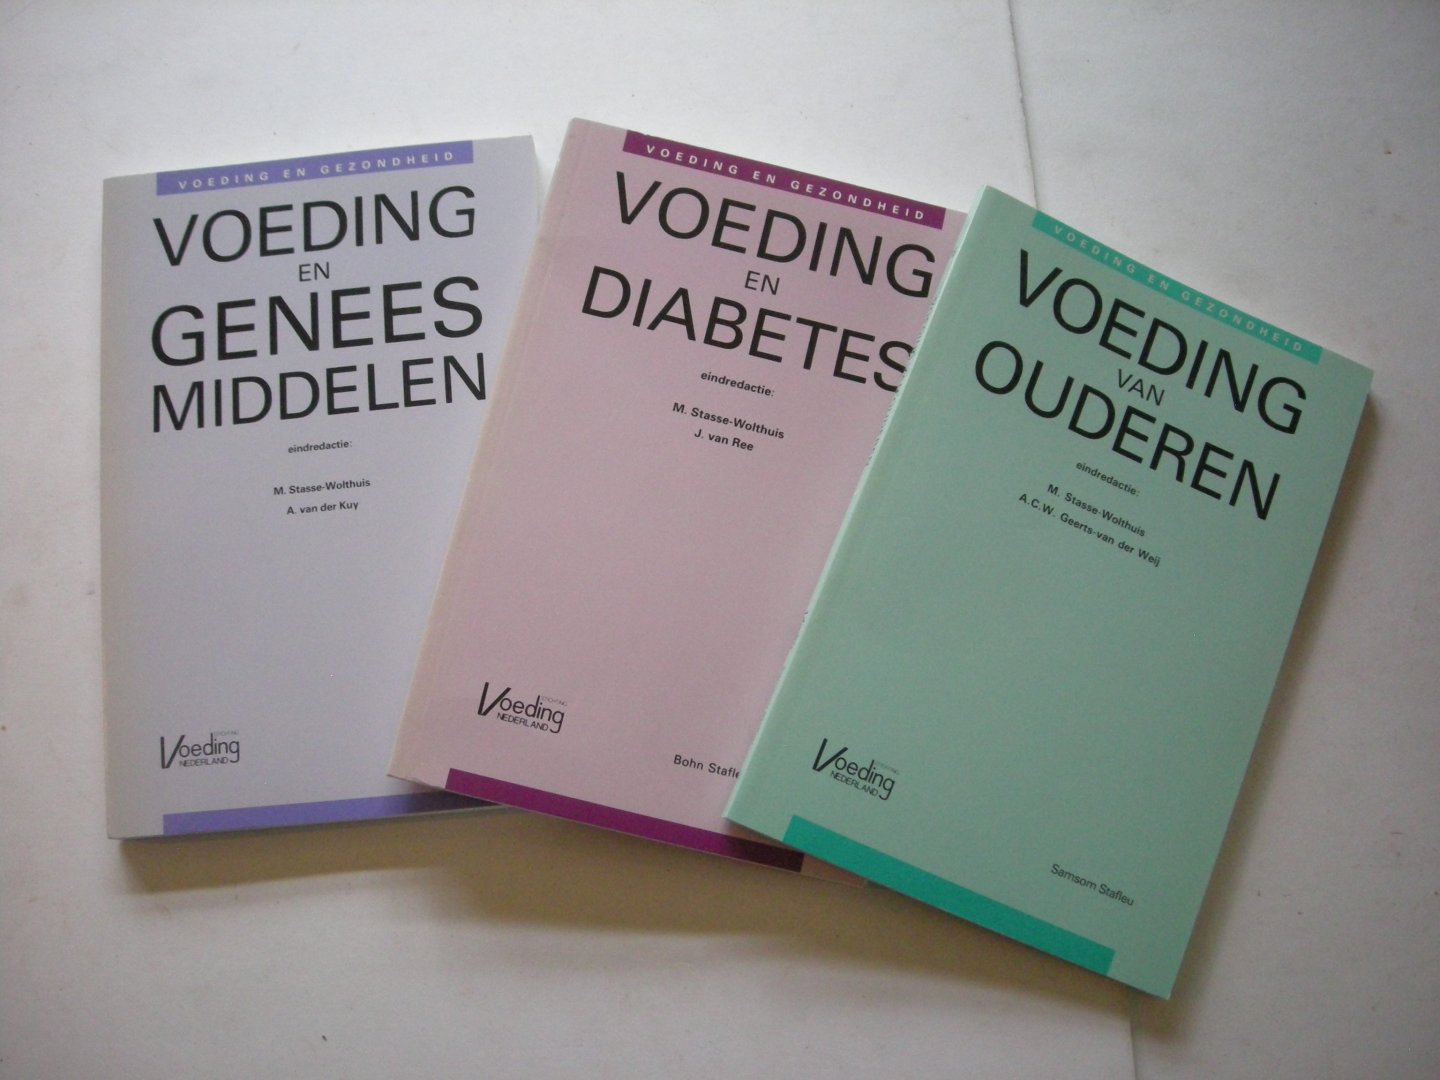 Stasse-Wolthuis, M. en Geerts-van der Weij, eindred. - Voeding en osteoporose